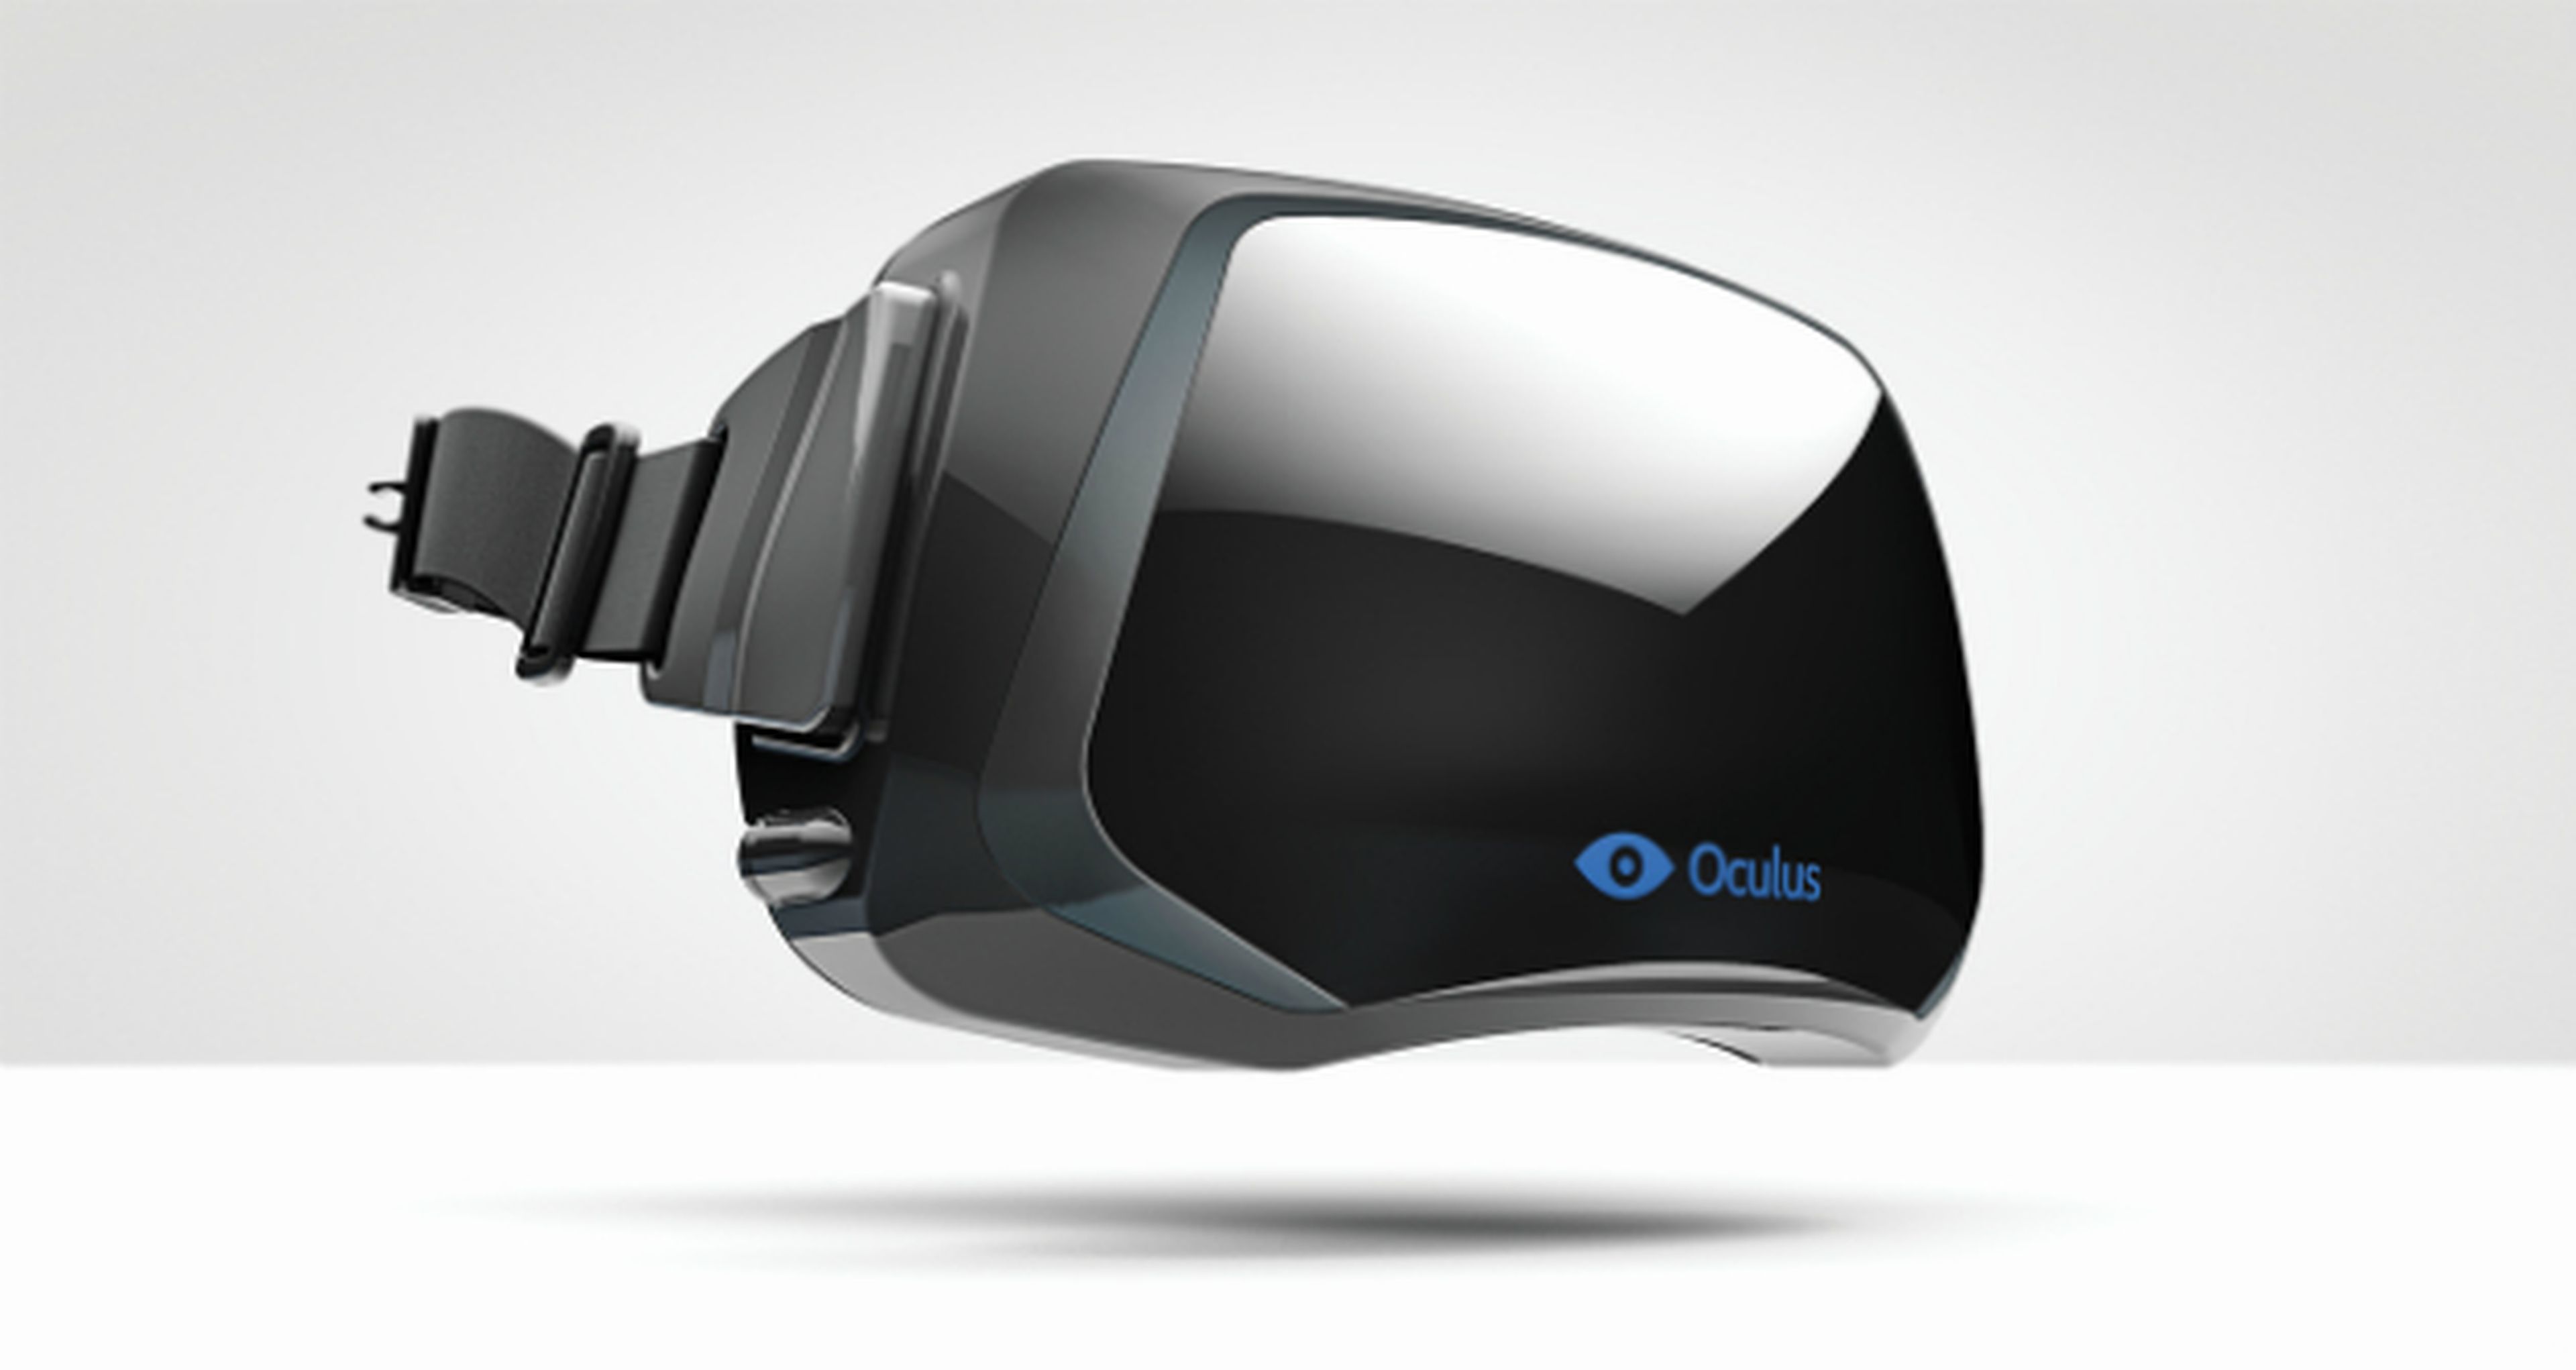 Take Two habla sobre Oculus Rift